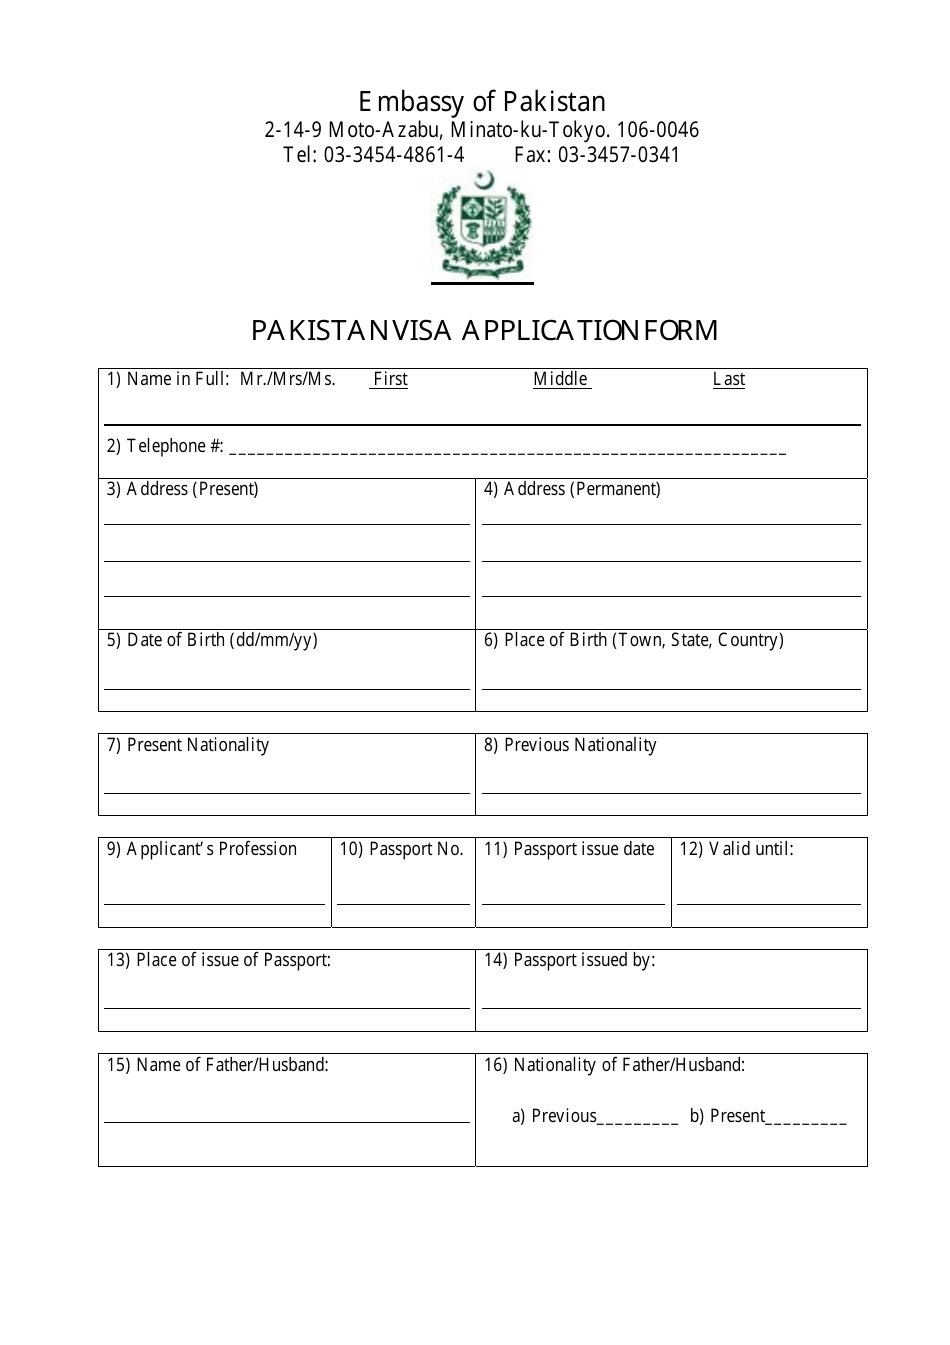 Tokyo Japan Pakistan Visa Application Form Embassy Of Pakistan Fill